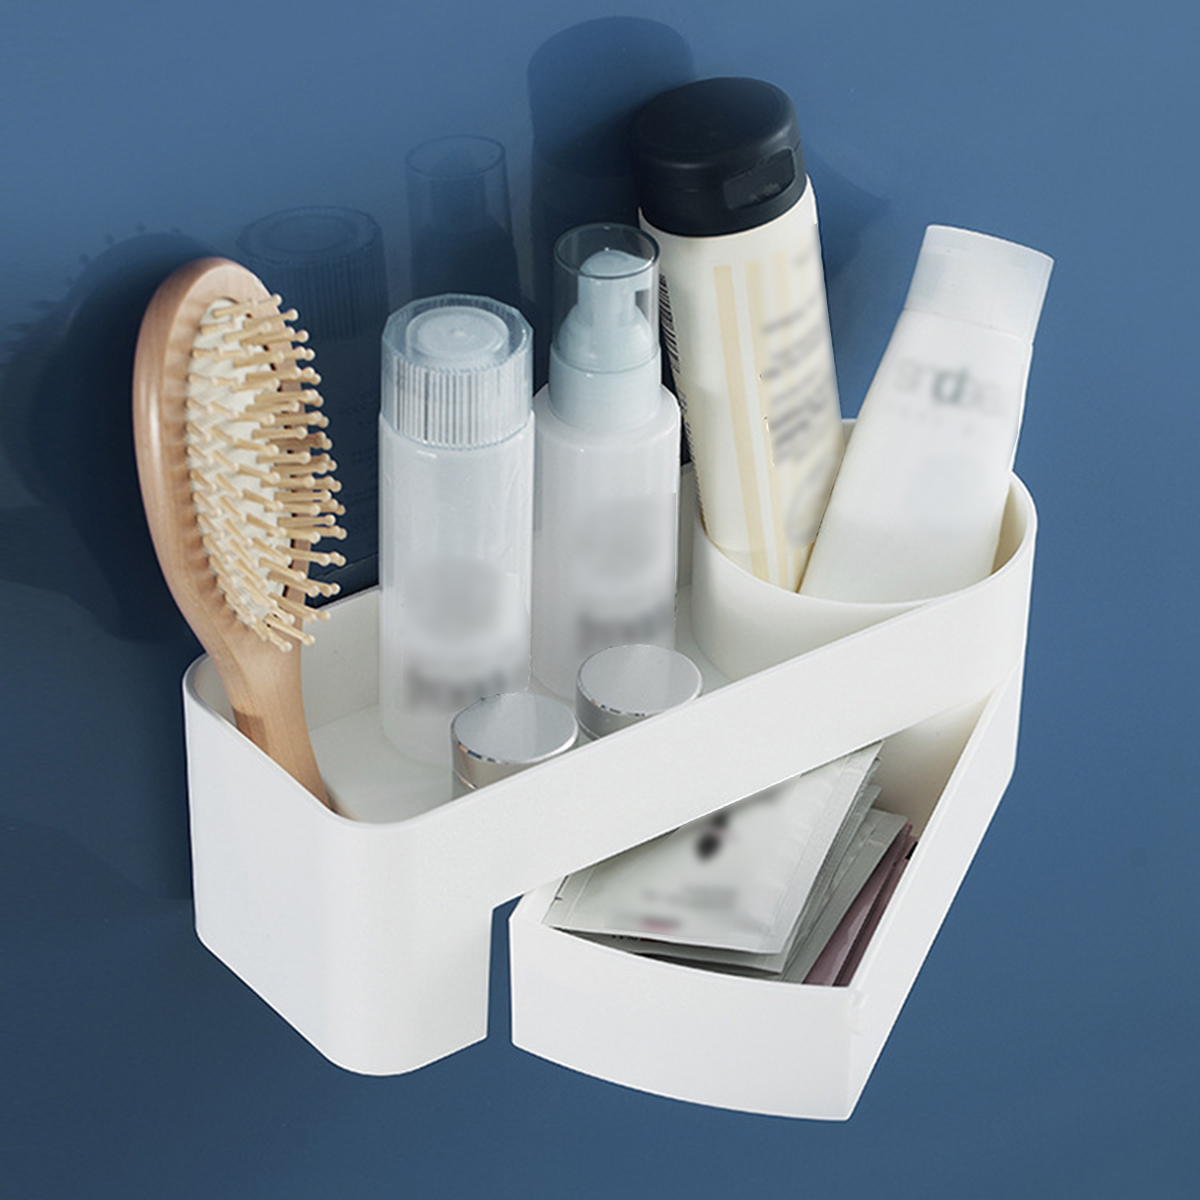 Bakeey-Non-perforated-Rotatable-Bathroom-Organizer-Wall-Mounted-Kitchen-Storage-Shelf-Shower-Shampoo-1659401-6